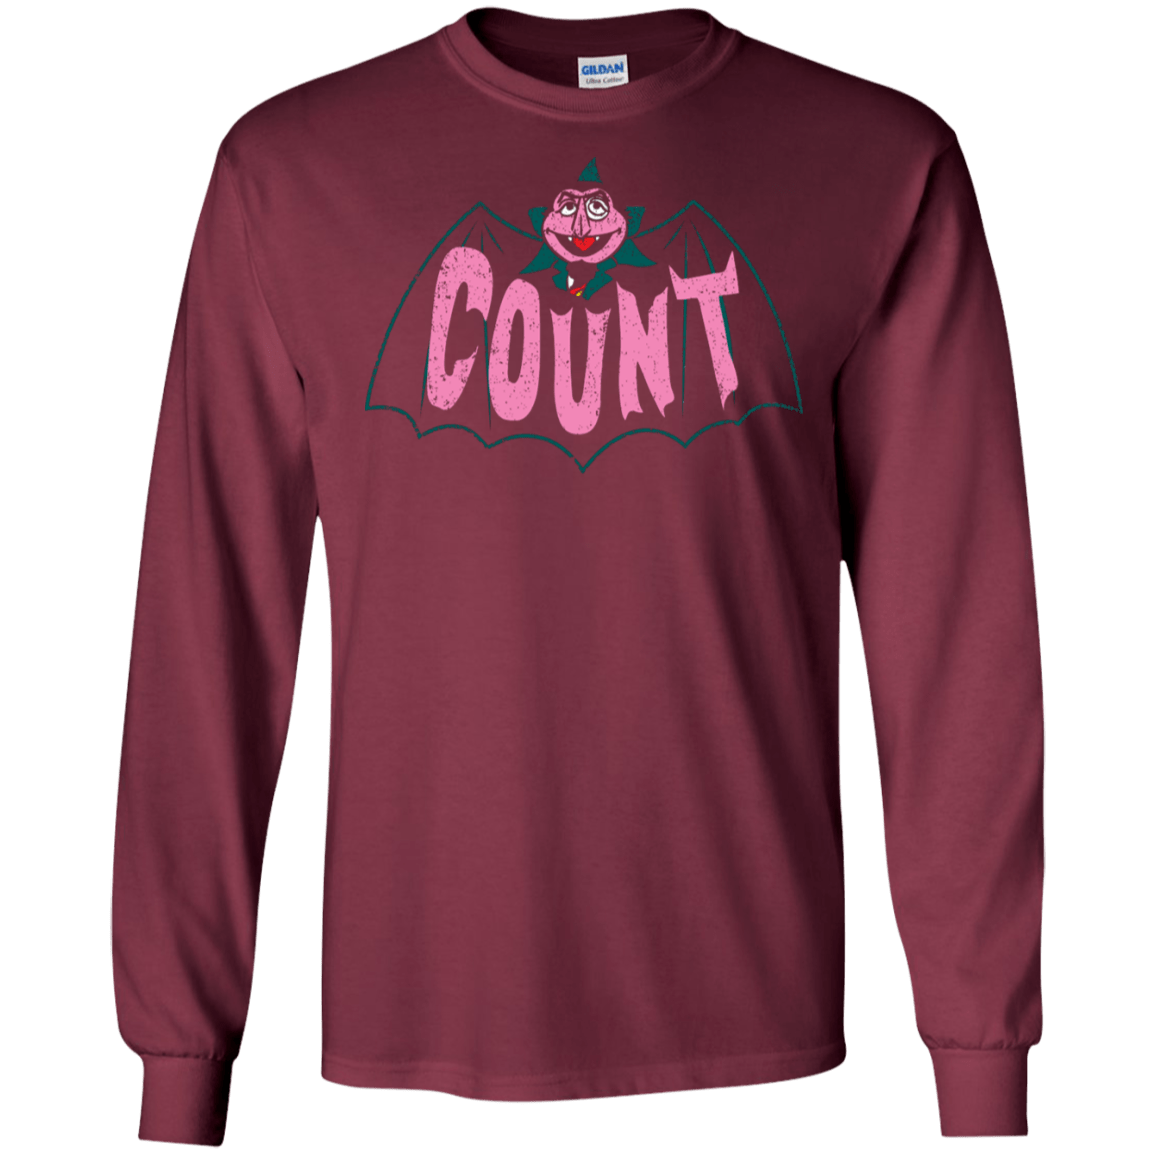 T-Shirts Maroon / S Count Men's Long Sleeve T-Shirt